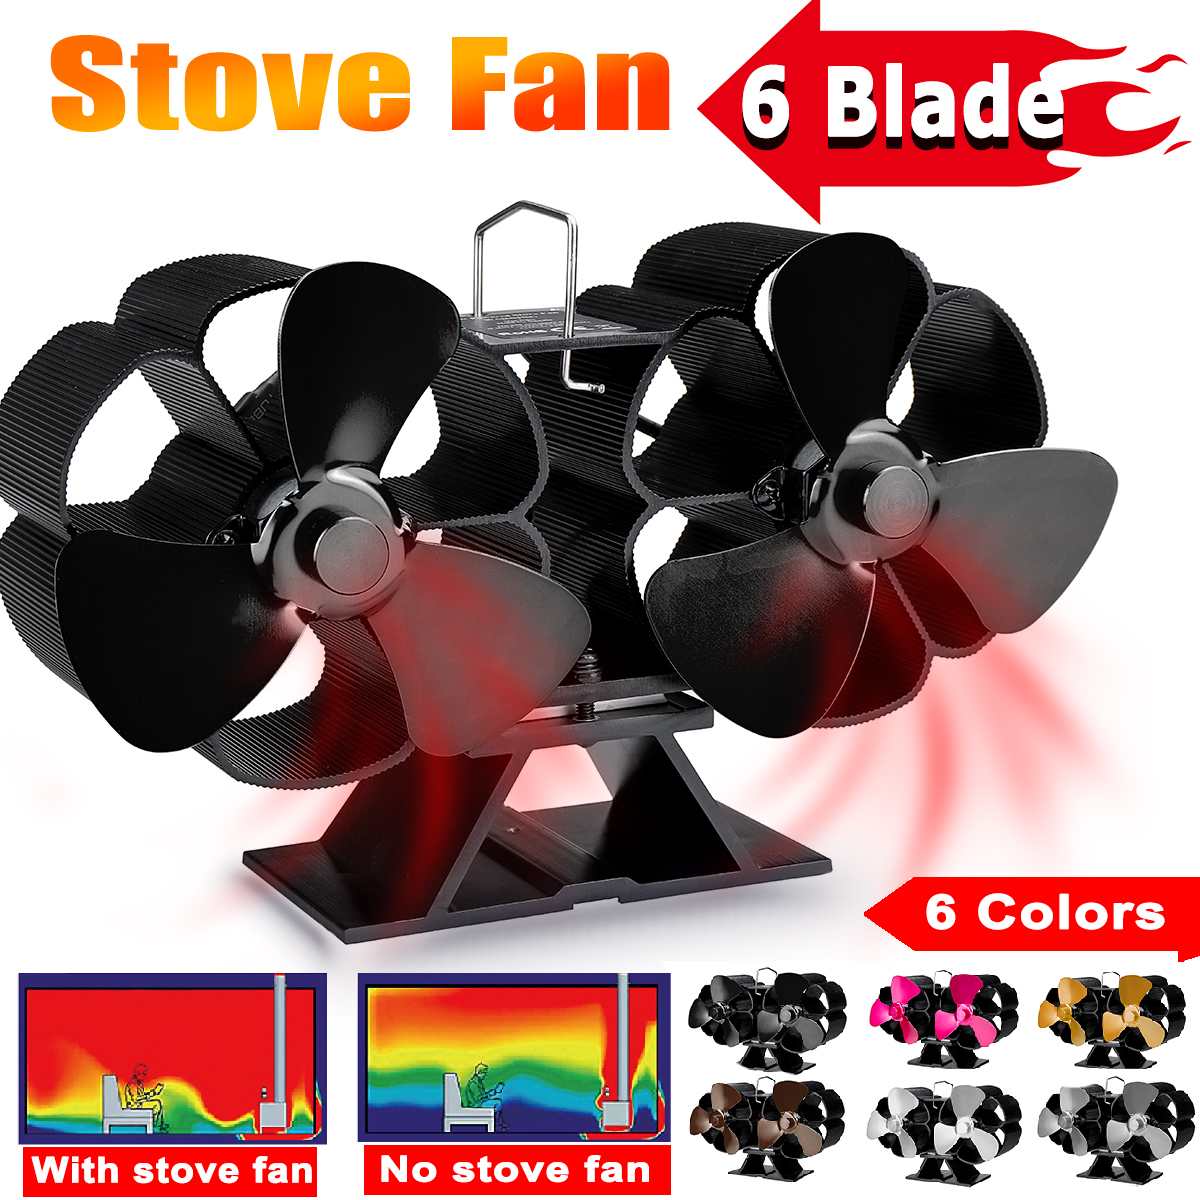 Stove Fan 6 Blade Fireplace Fan Heat Powered komin Wood Burner Eco Quiet Home Efficient Heat Distribution